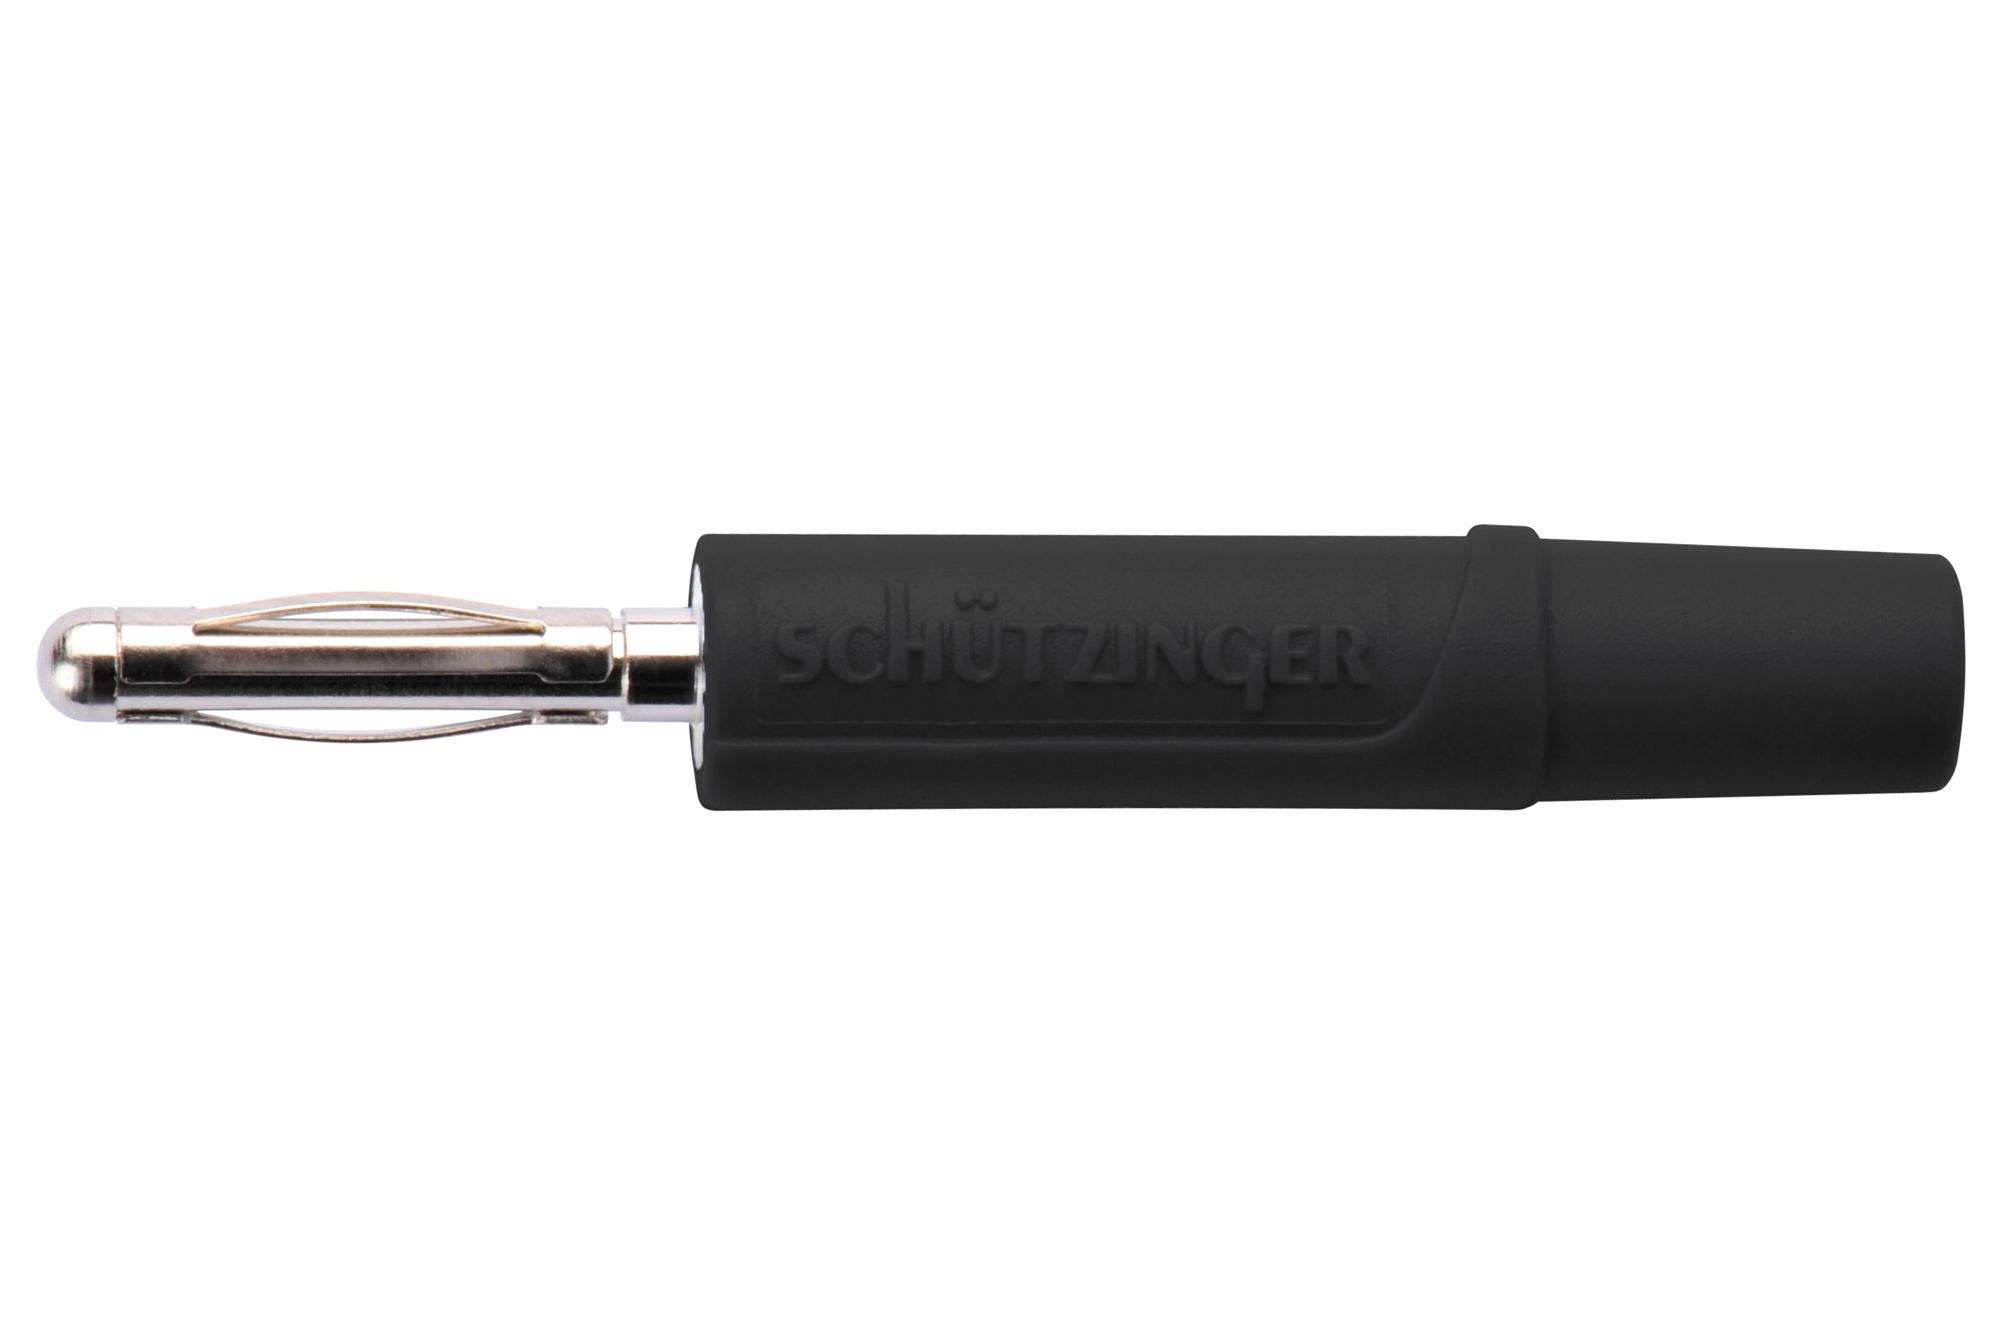 Schutzinger Fk 02 L NI / Sw Connector, Banana, Plug, 10A, Black, Solder